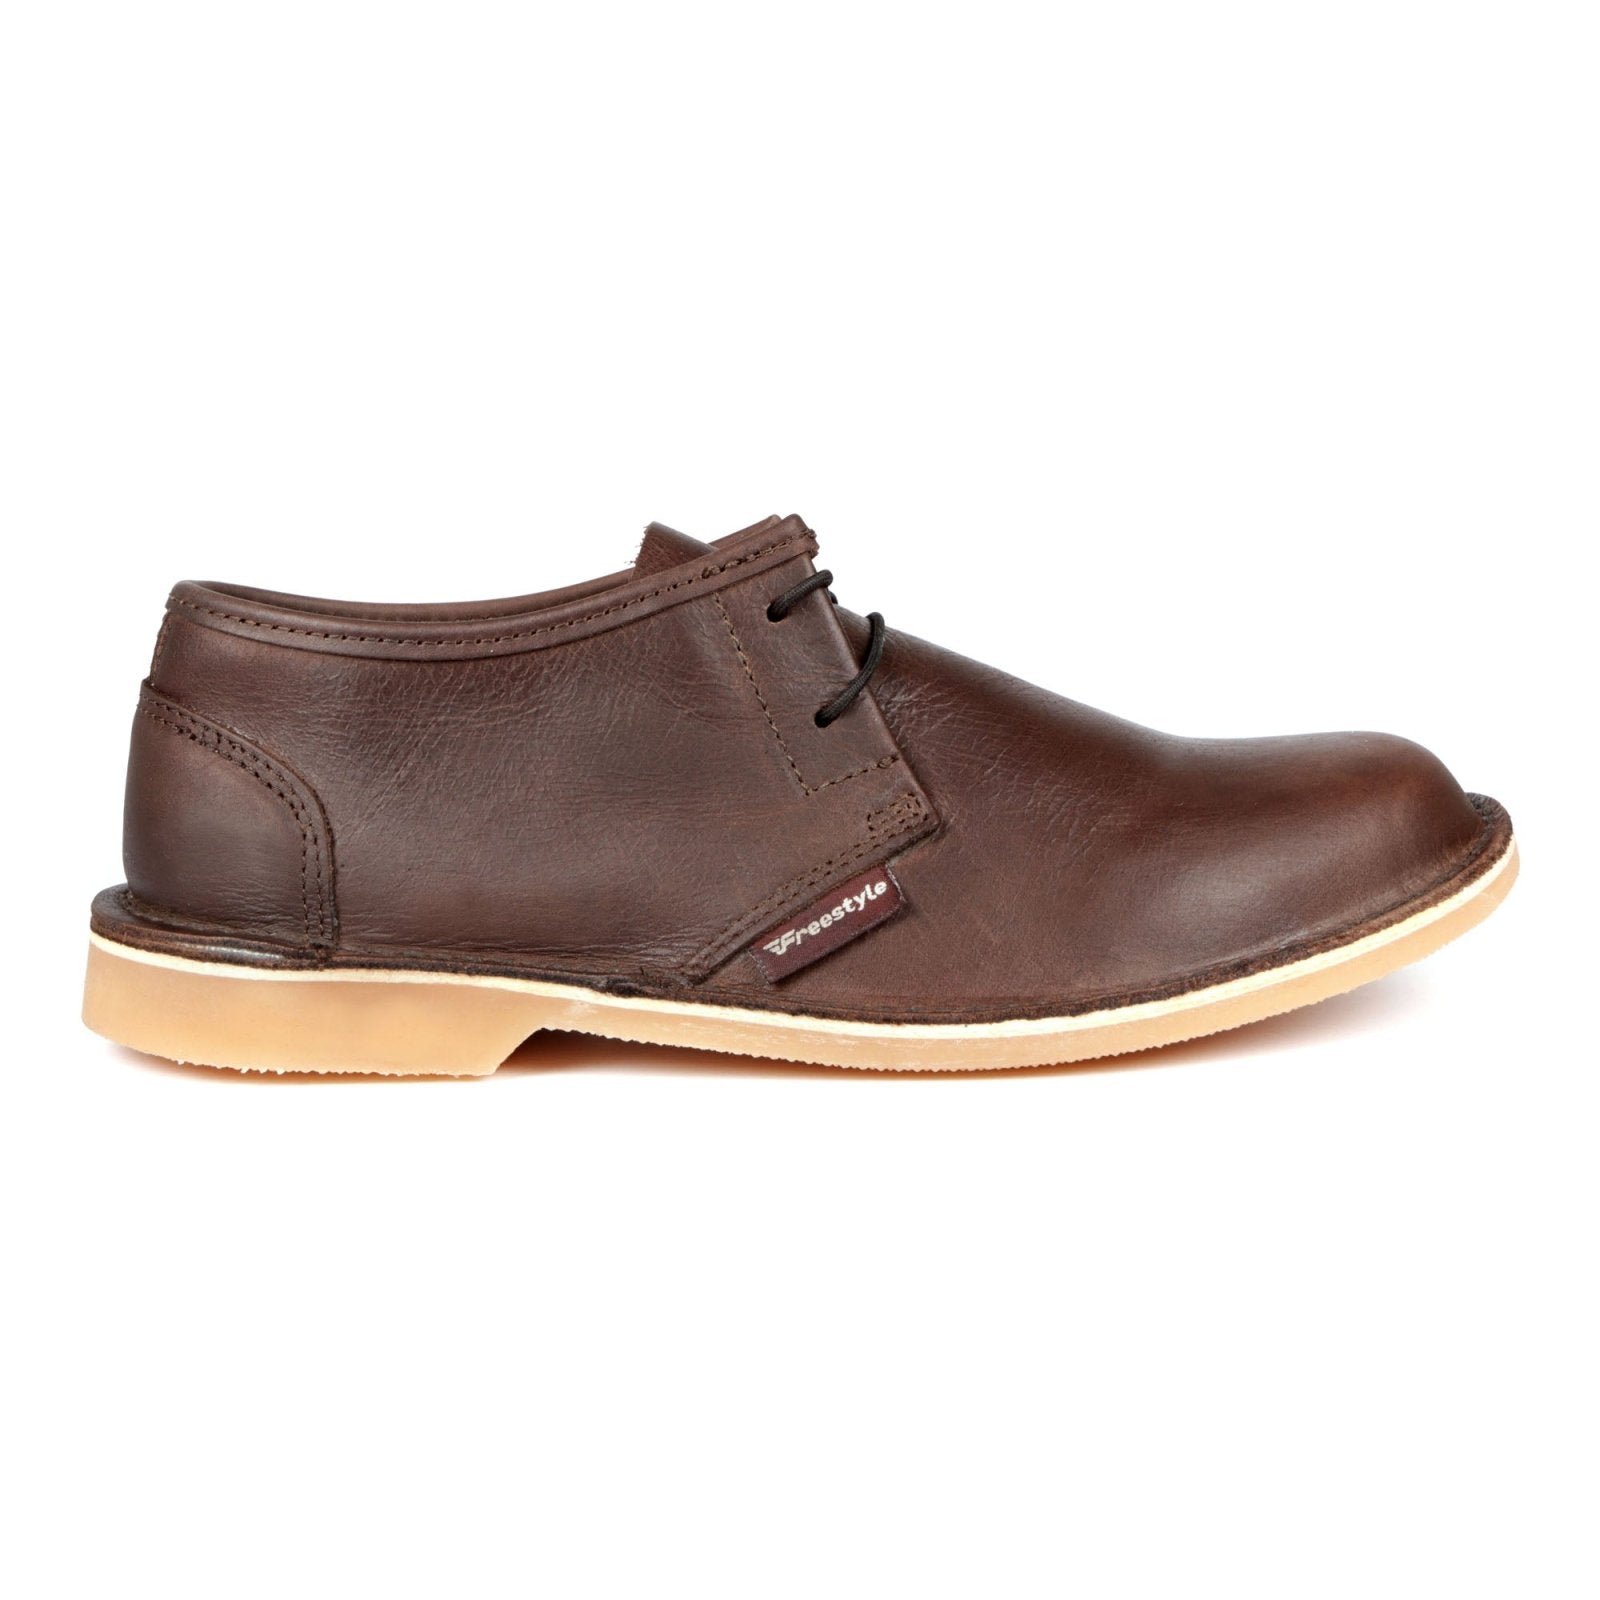 Owen Men's Premium Nubuck Leather Vellie shoe - Freestyle SA Proudly local leather boots veldskoens vellies leather shoes suede veldskoens